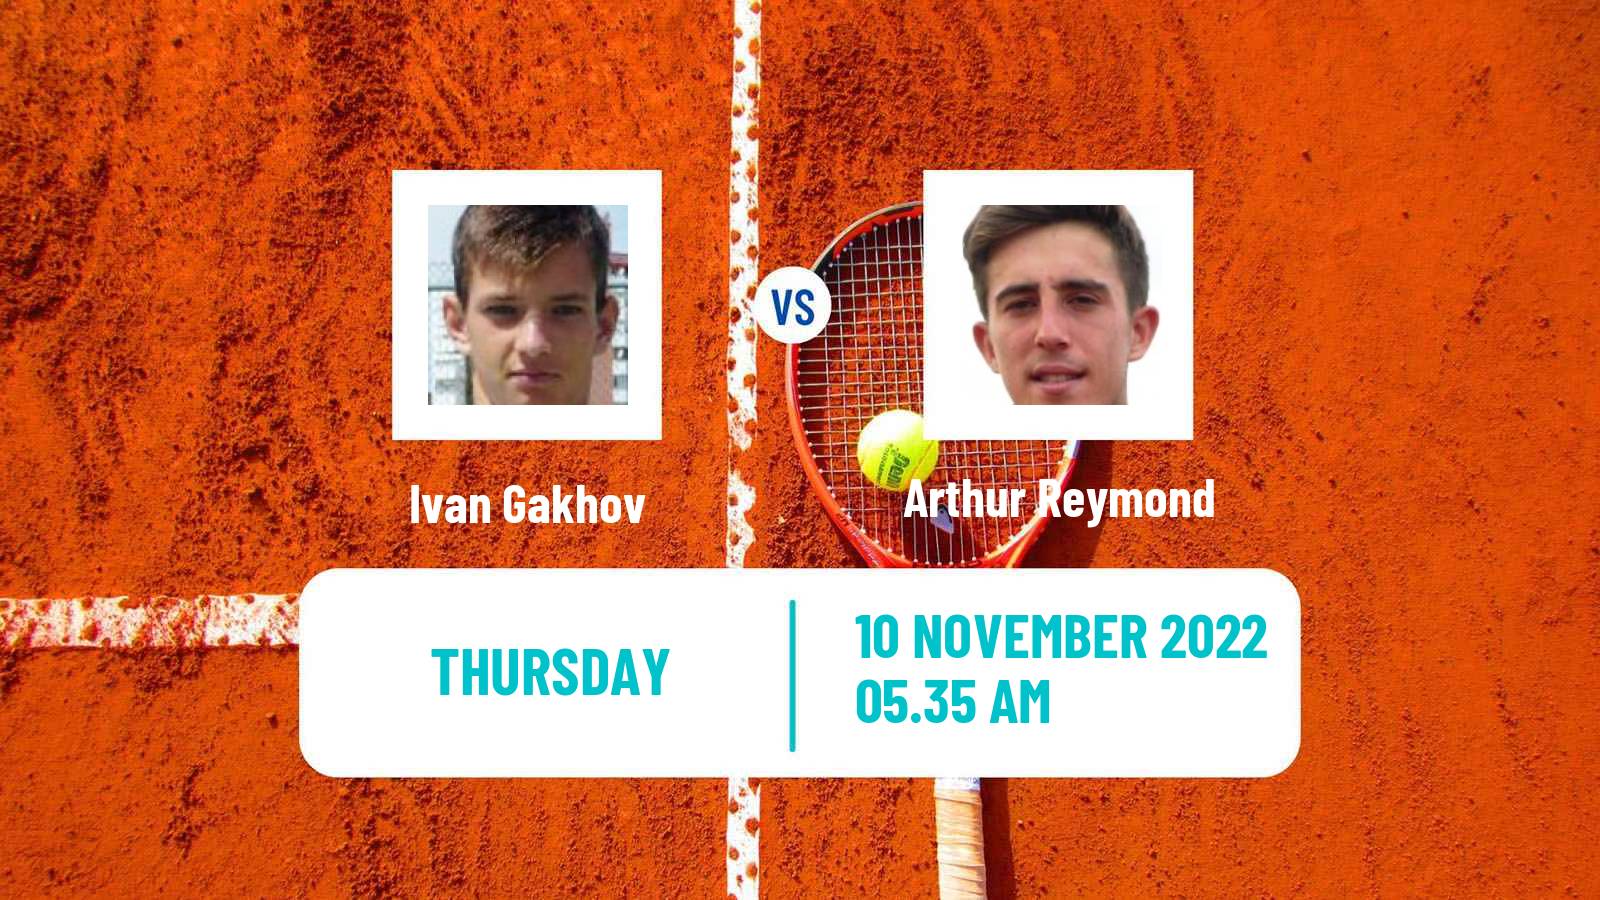 Tennis ITF Tournaments Ivan Gakhov - Arthur Reymond